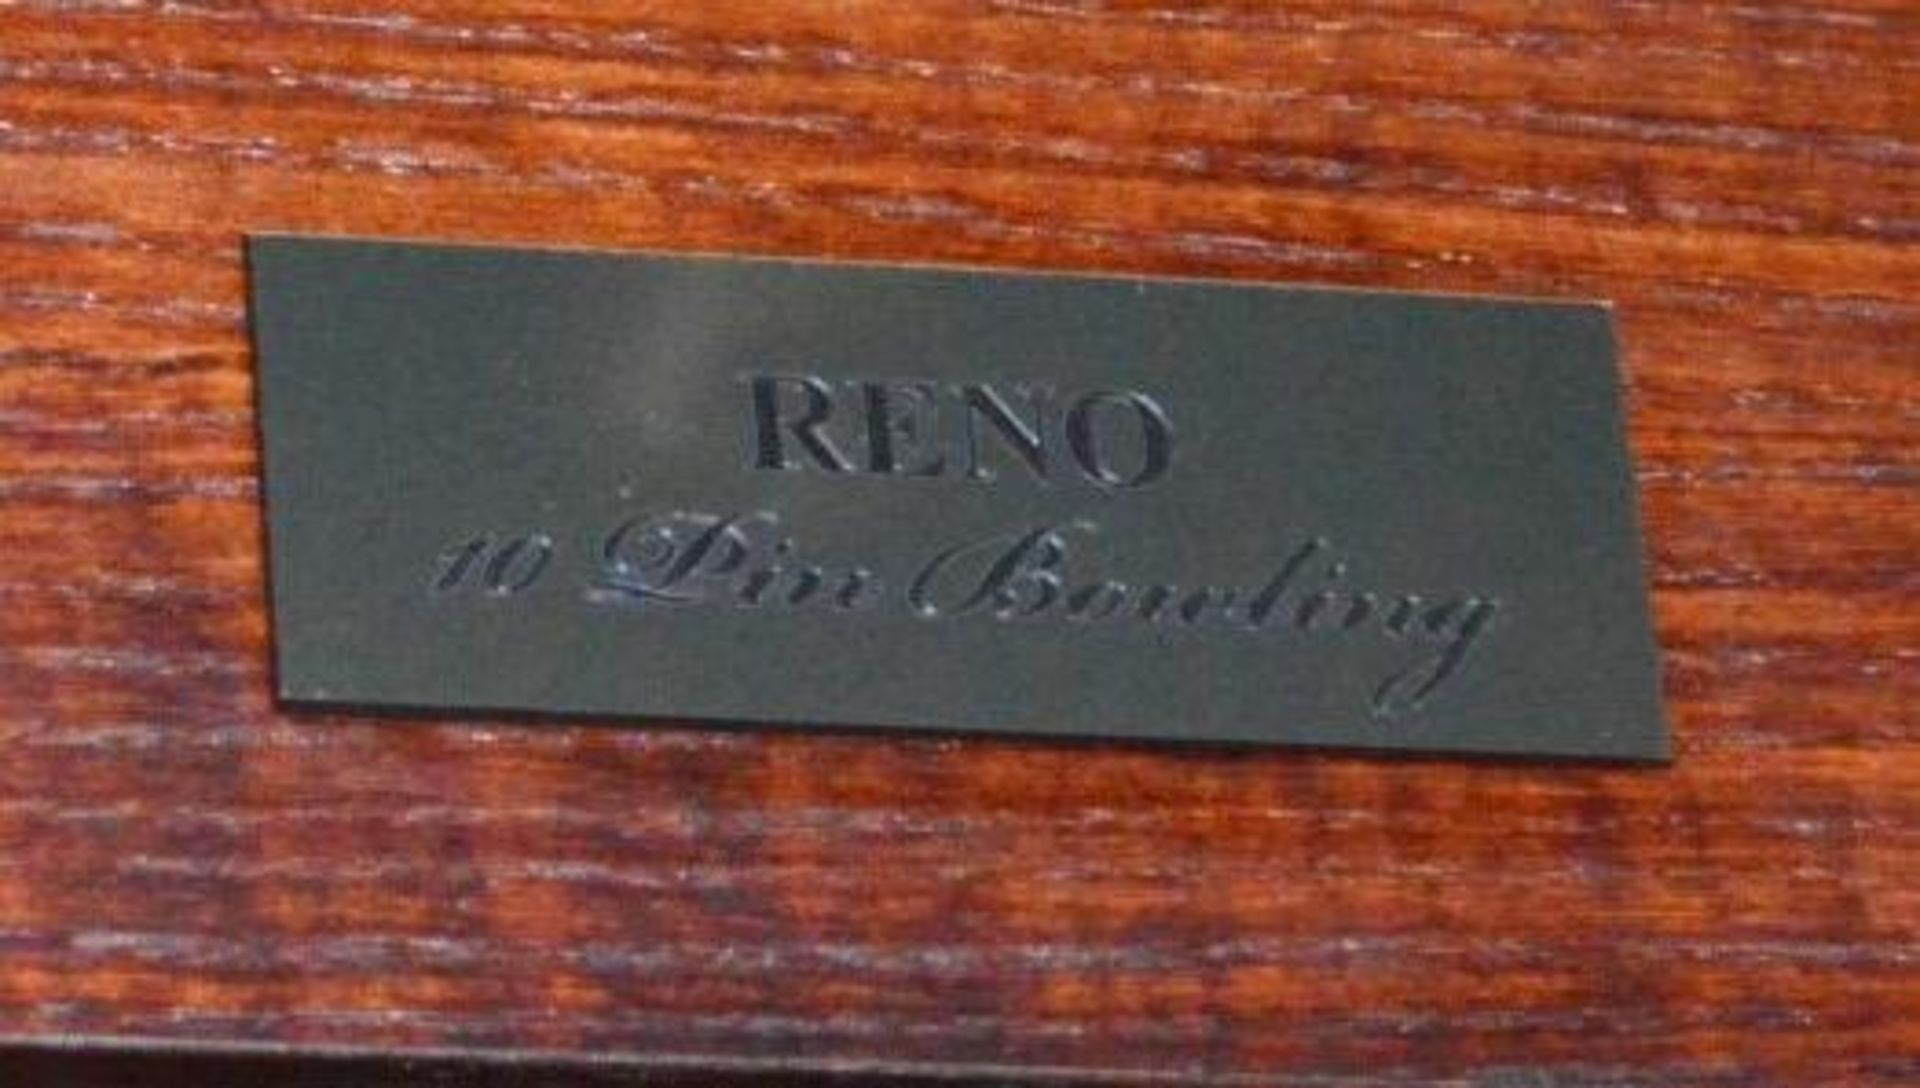 1 x Americana Wall Mounted Illuminated Display Case - RENO 10 PIN BOWLING - Includes Various Images, - Bild 5 aus 5